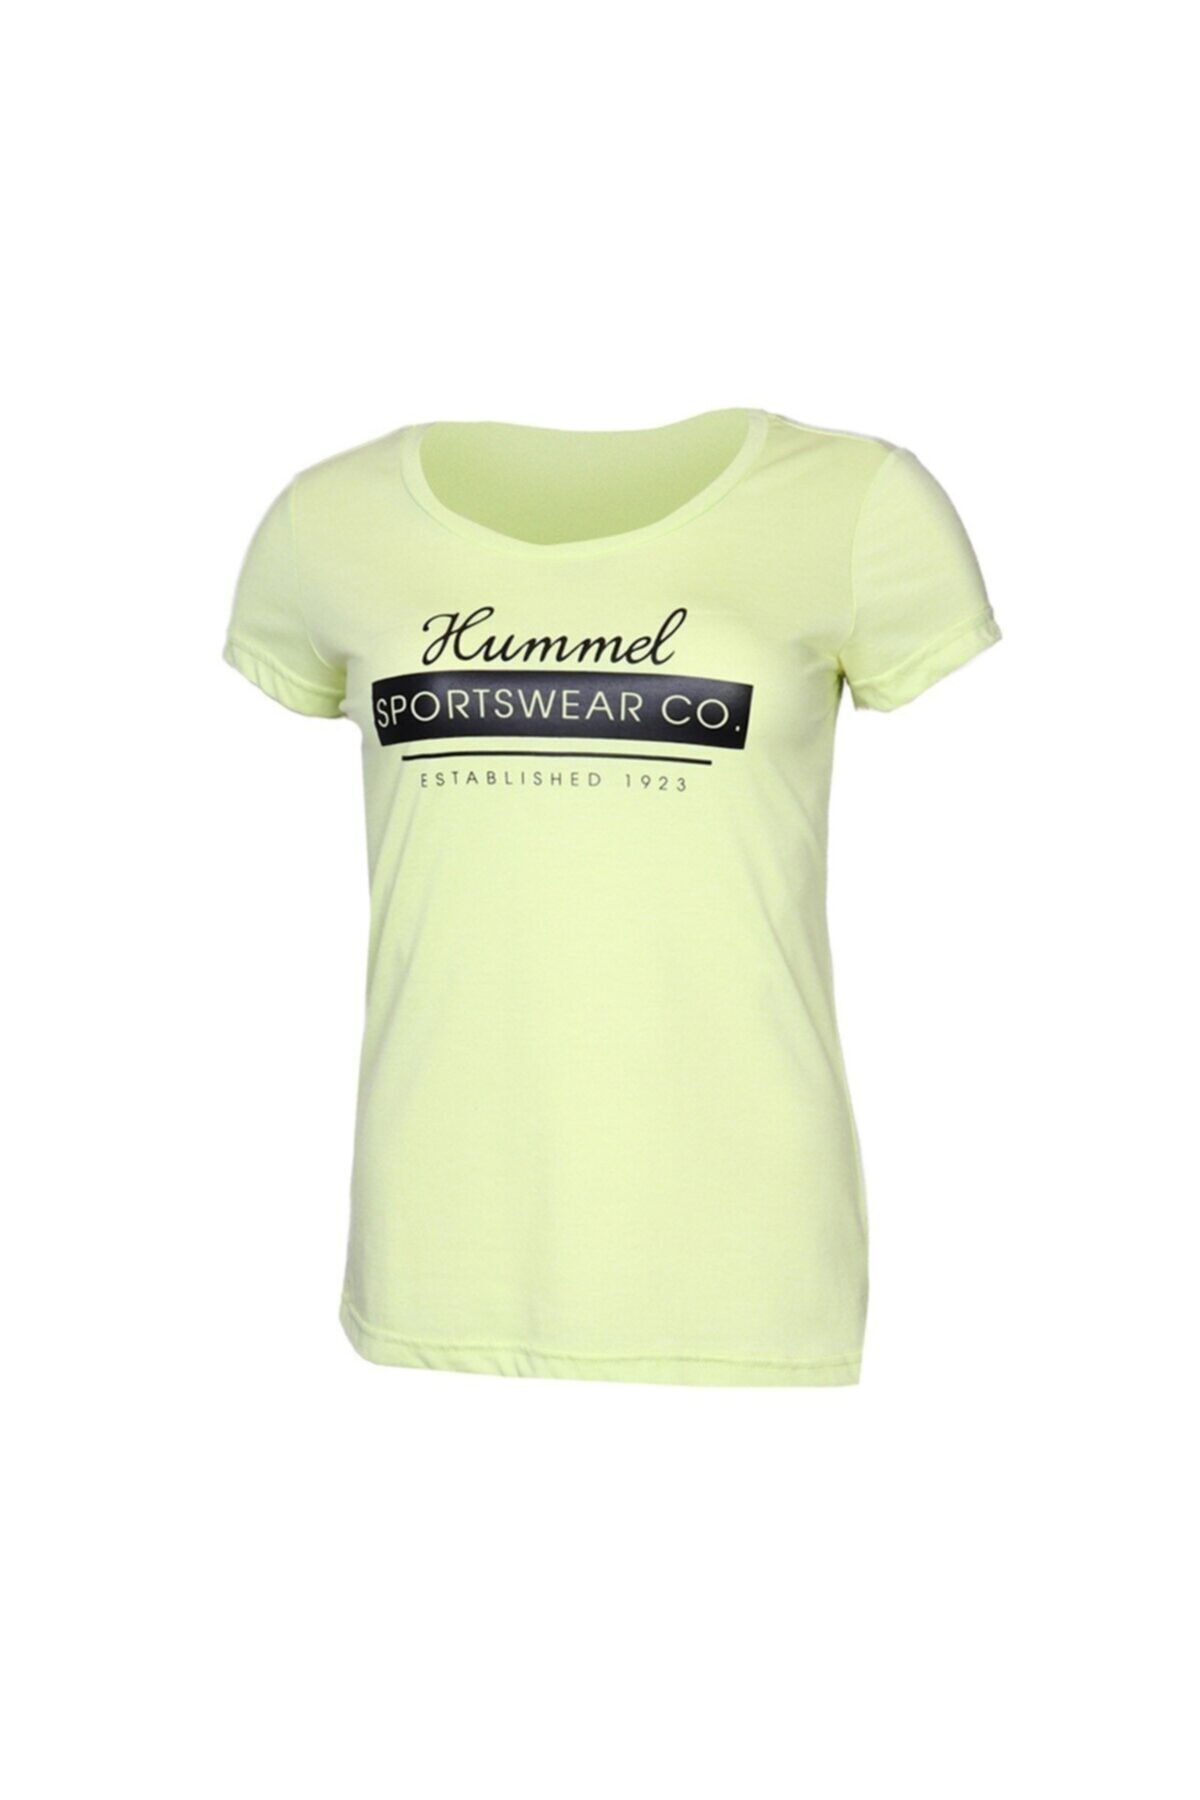 hummel HMLRUBY T-SHIRT S/S Sarı Kadın T-Shirt 100580961